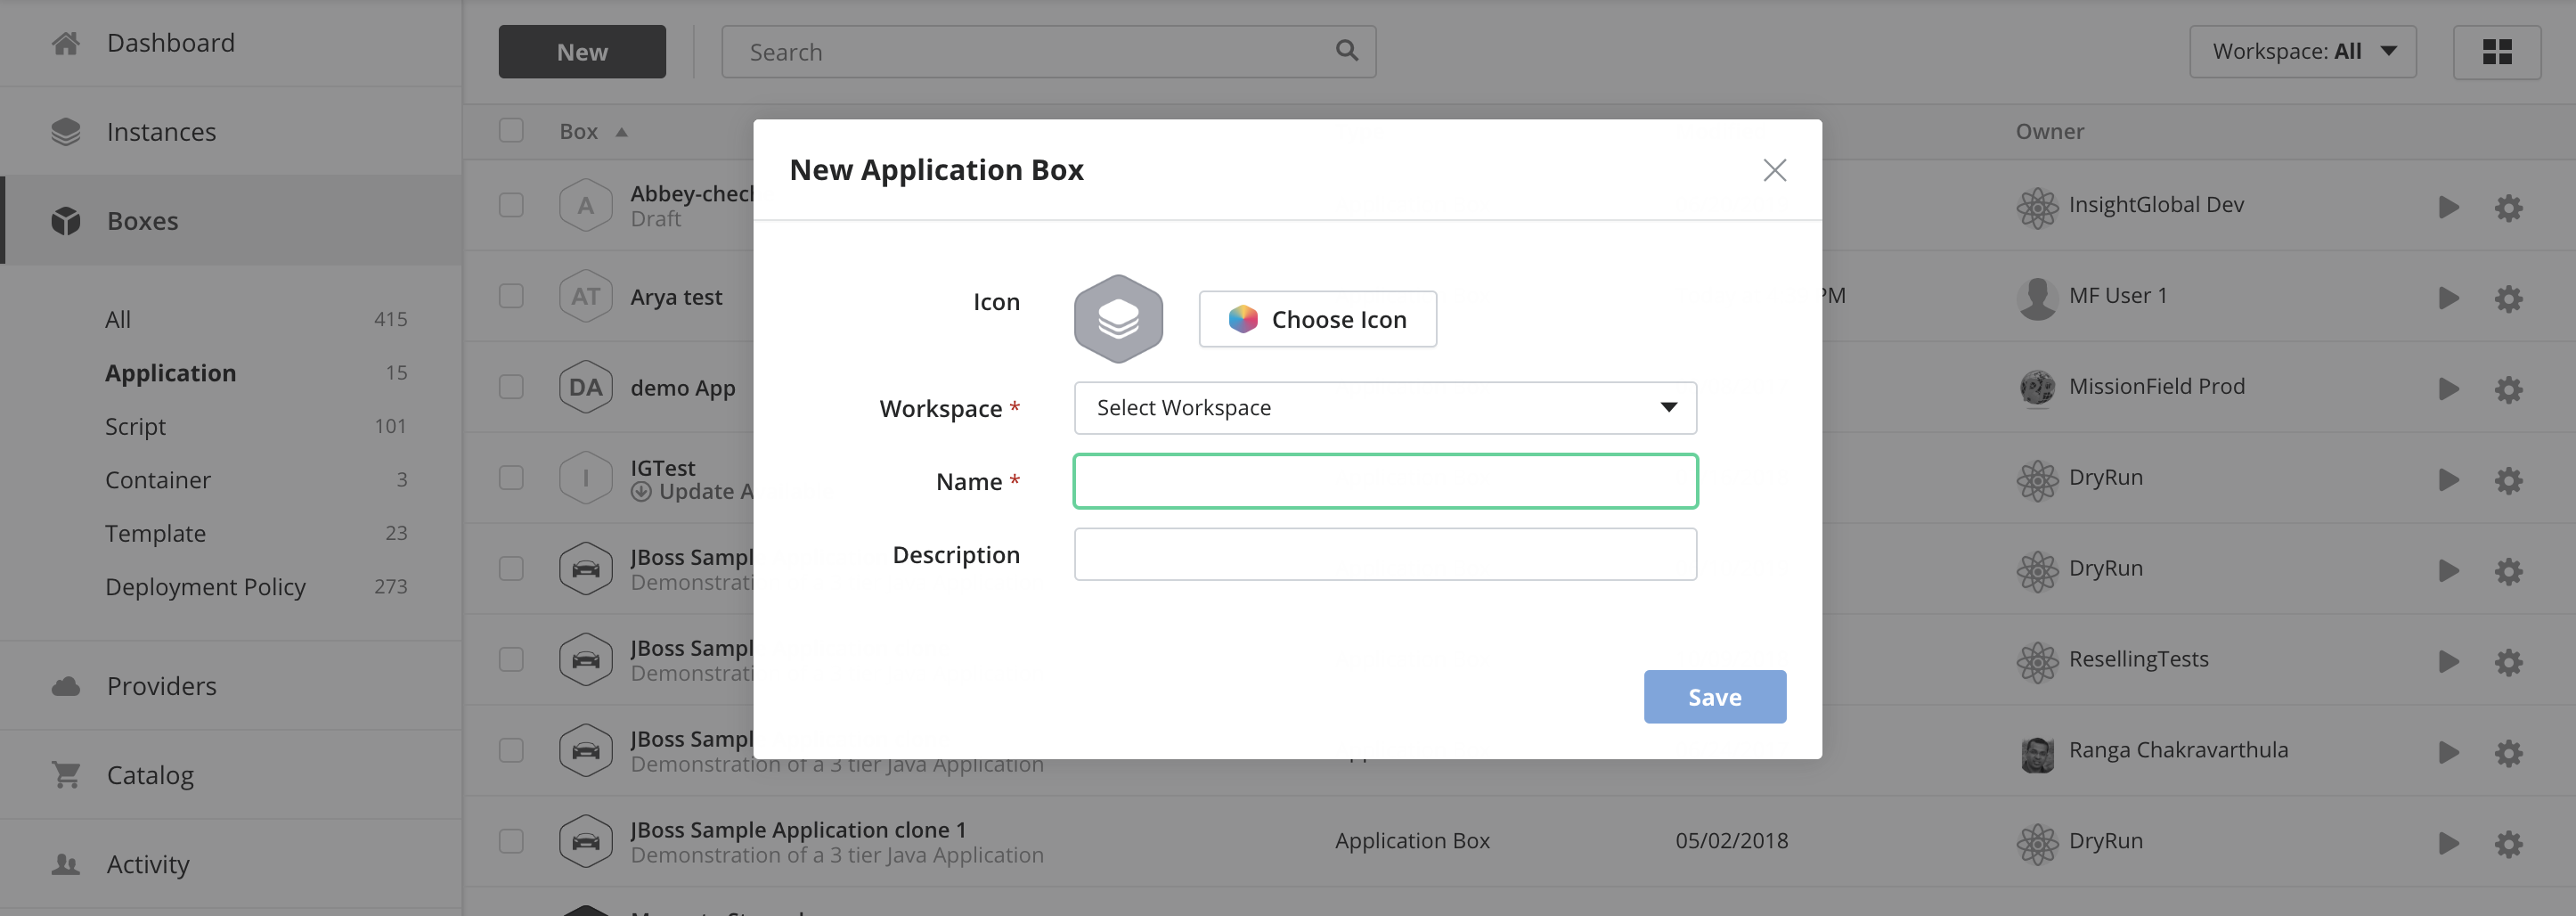 New Application Box data